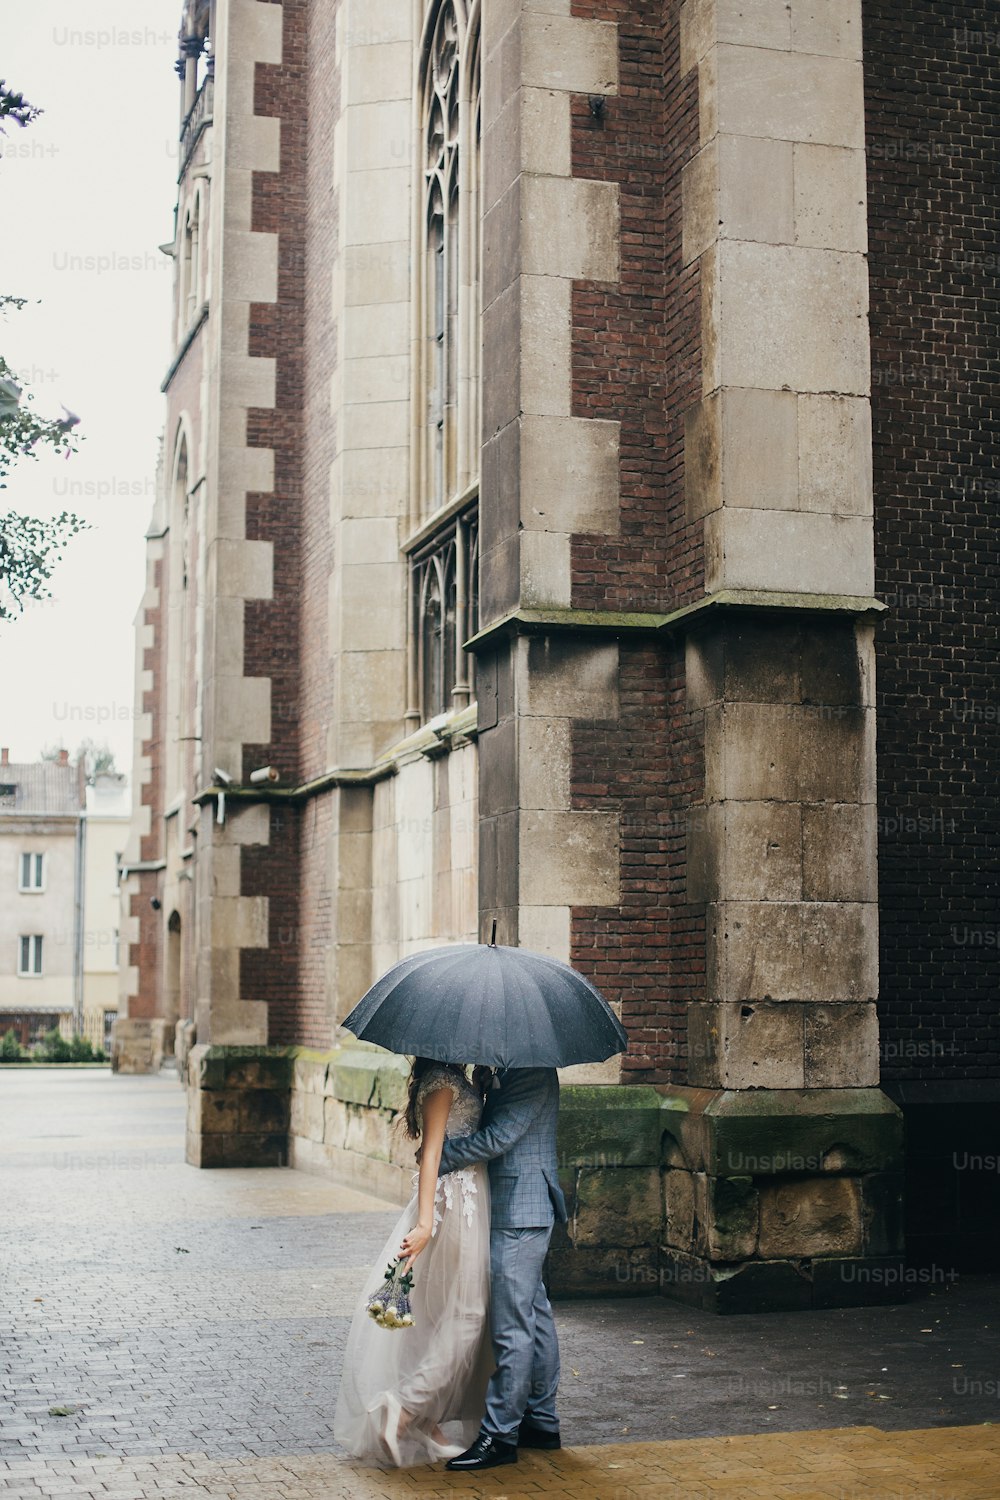 Stylish bride and groom kissing under umbrella on background of old church in rain. Provence wedding. Beautiful wedding couple embracing under black umbrella in rainy street. Romantic moment